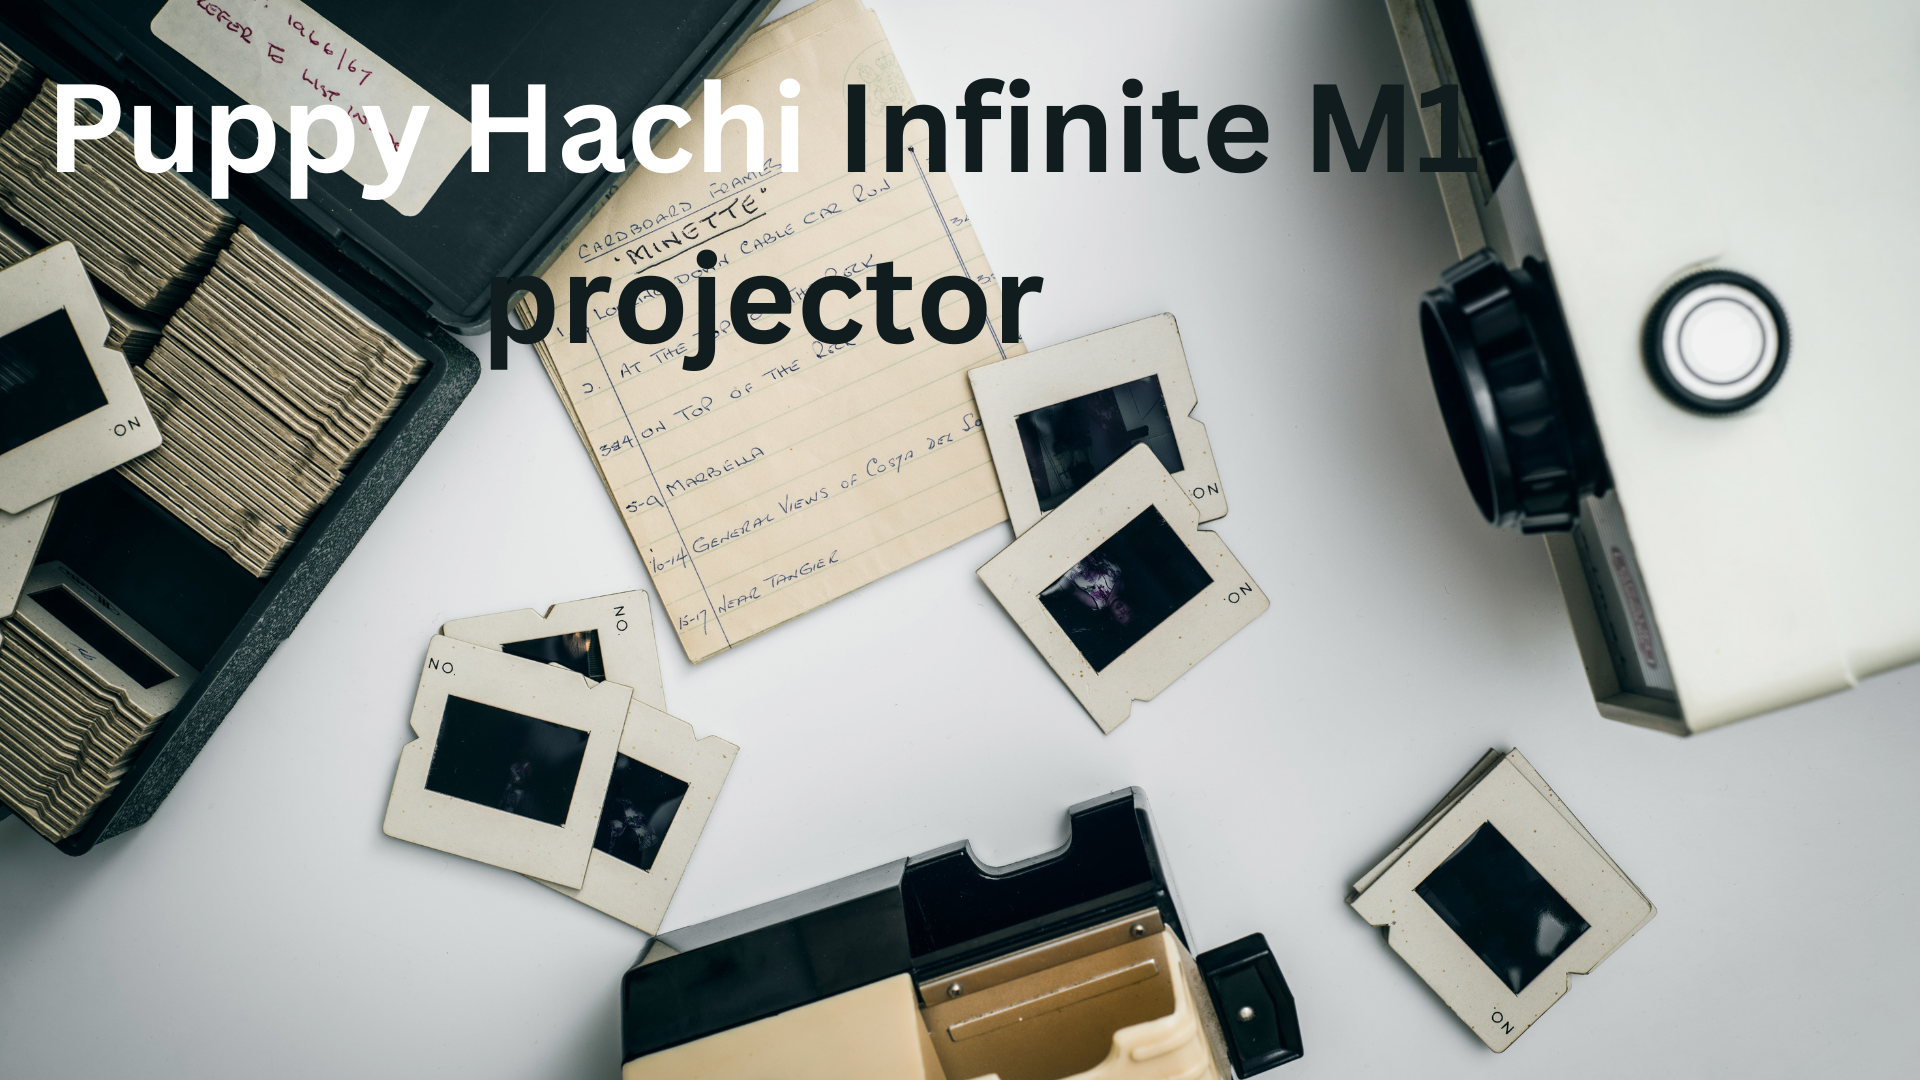 Puppy Hachi Infinite M1 projector